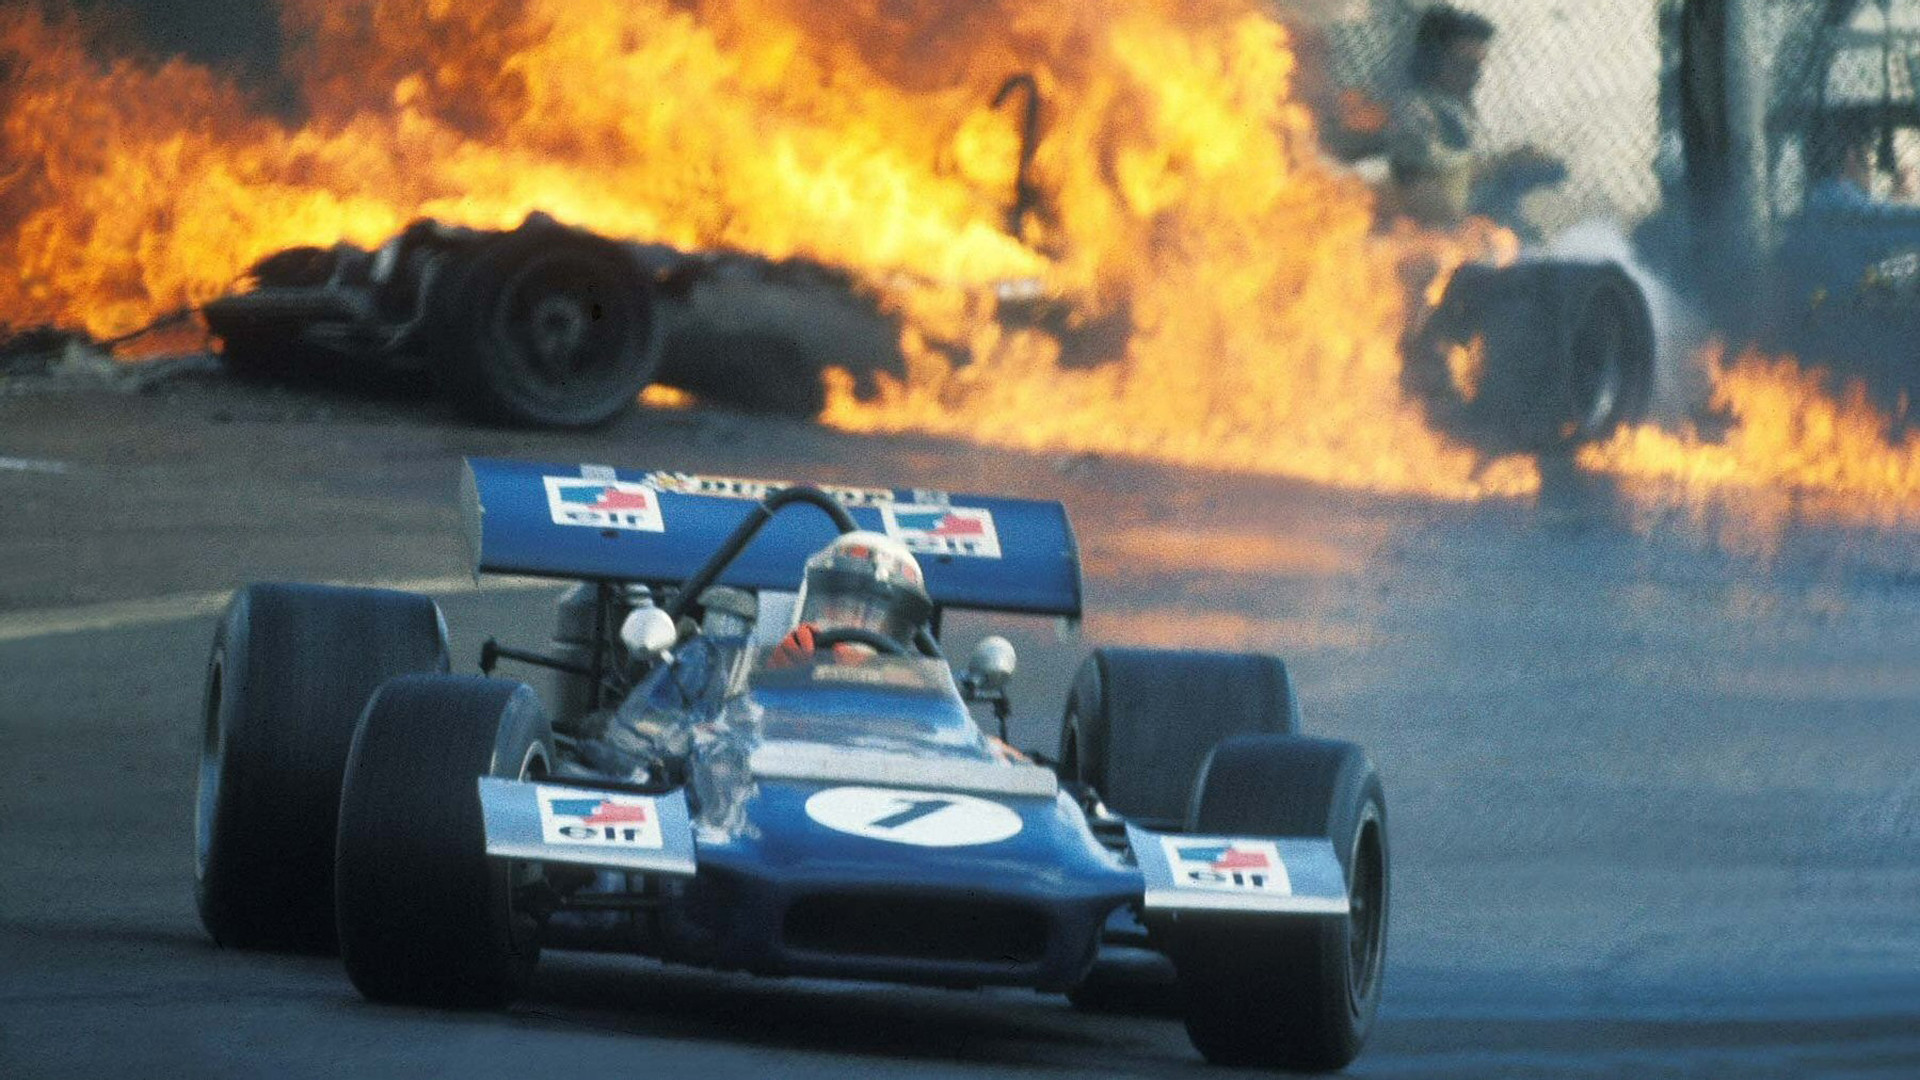 General 1920x1080 Formula 1 car explosion racing